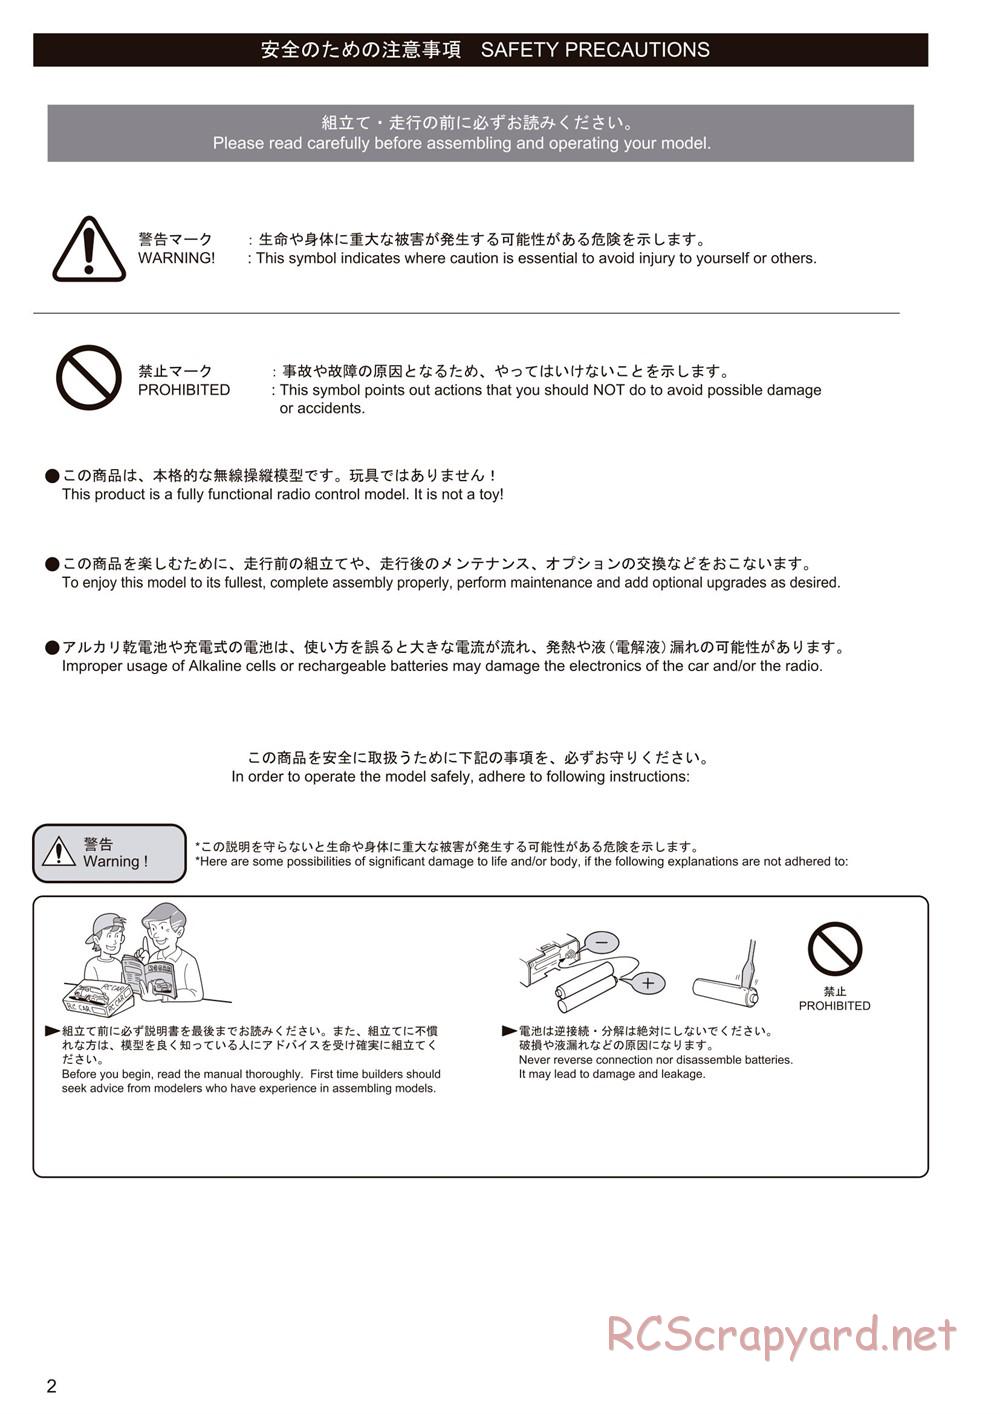 Kyosho - Lazer ZX6.6 - Manual - Page 2